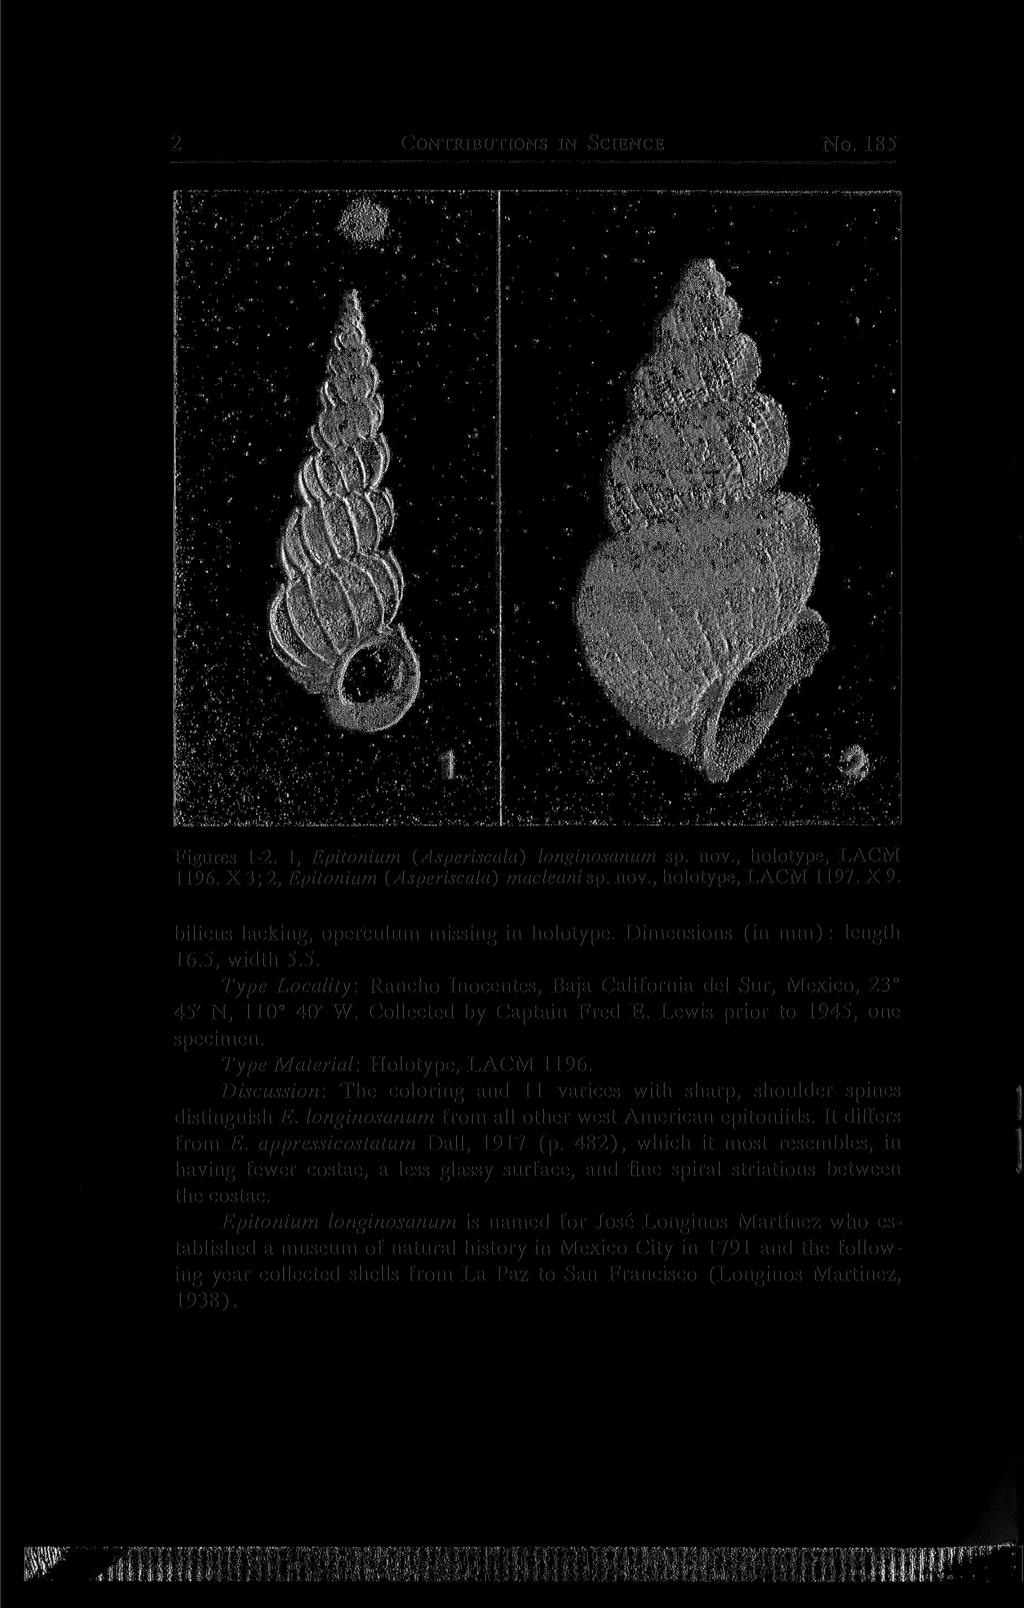 2 CONTRIBUTIONS IN SCIENCE No. 185 Figures 1-2. 1, Epitonium {Asperiscala) longinosanum sp. nov., holotype, LACM 1196. X 3; 2, Epitonium {Asperiscala) macleani sp. nov., holotype, LACM 1197. X 9.